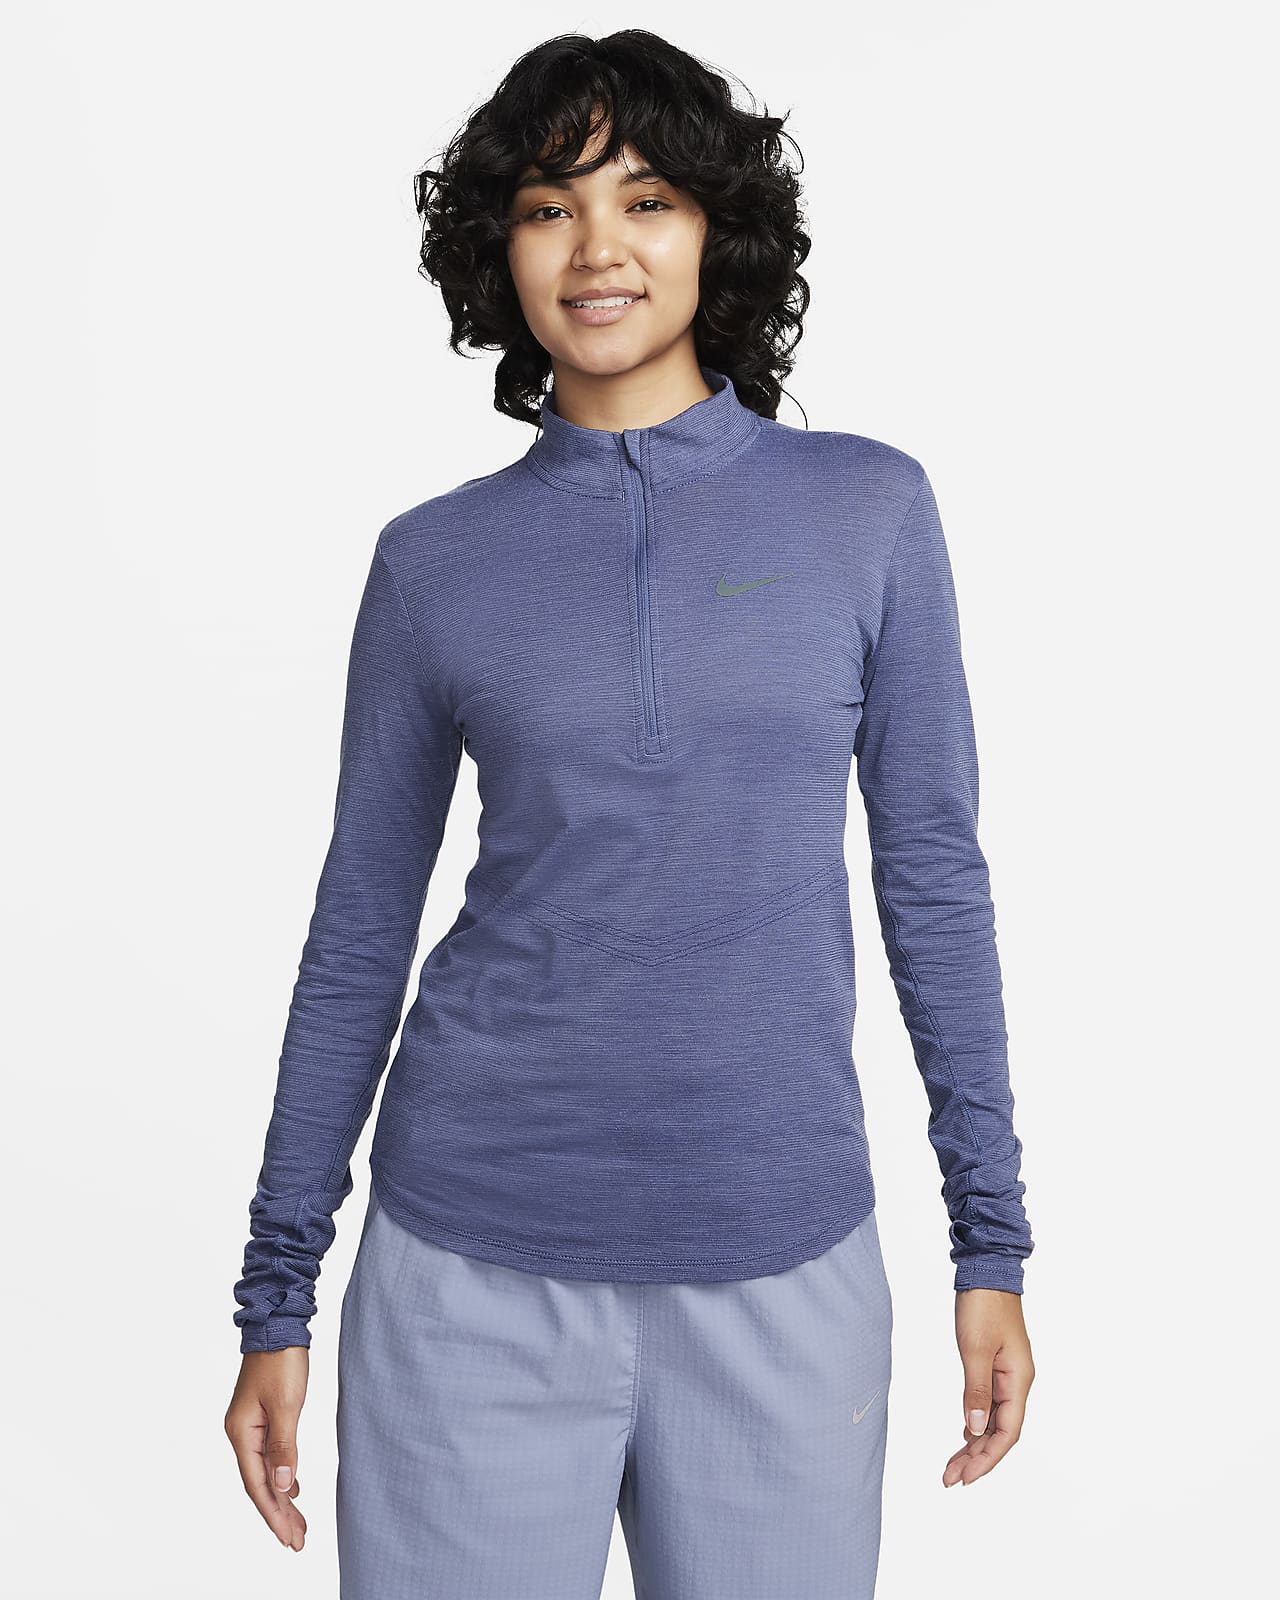 Nike Dri-FIT Swift Women's Long-Sleeve Wool Running Top